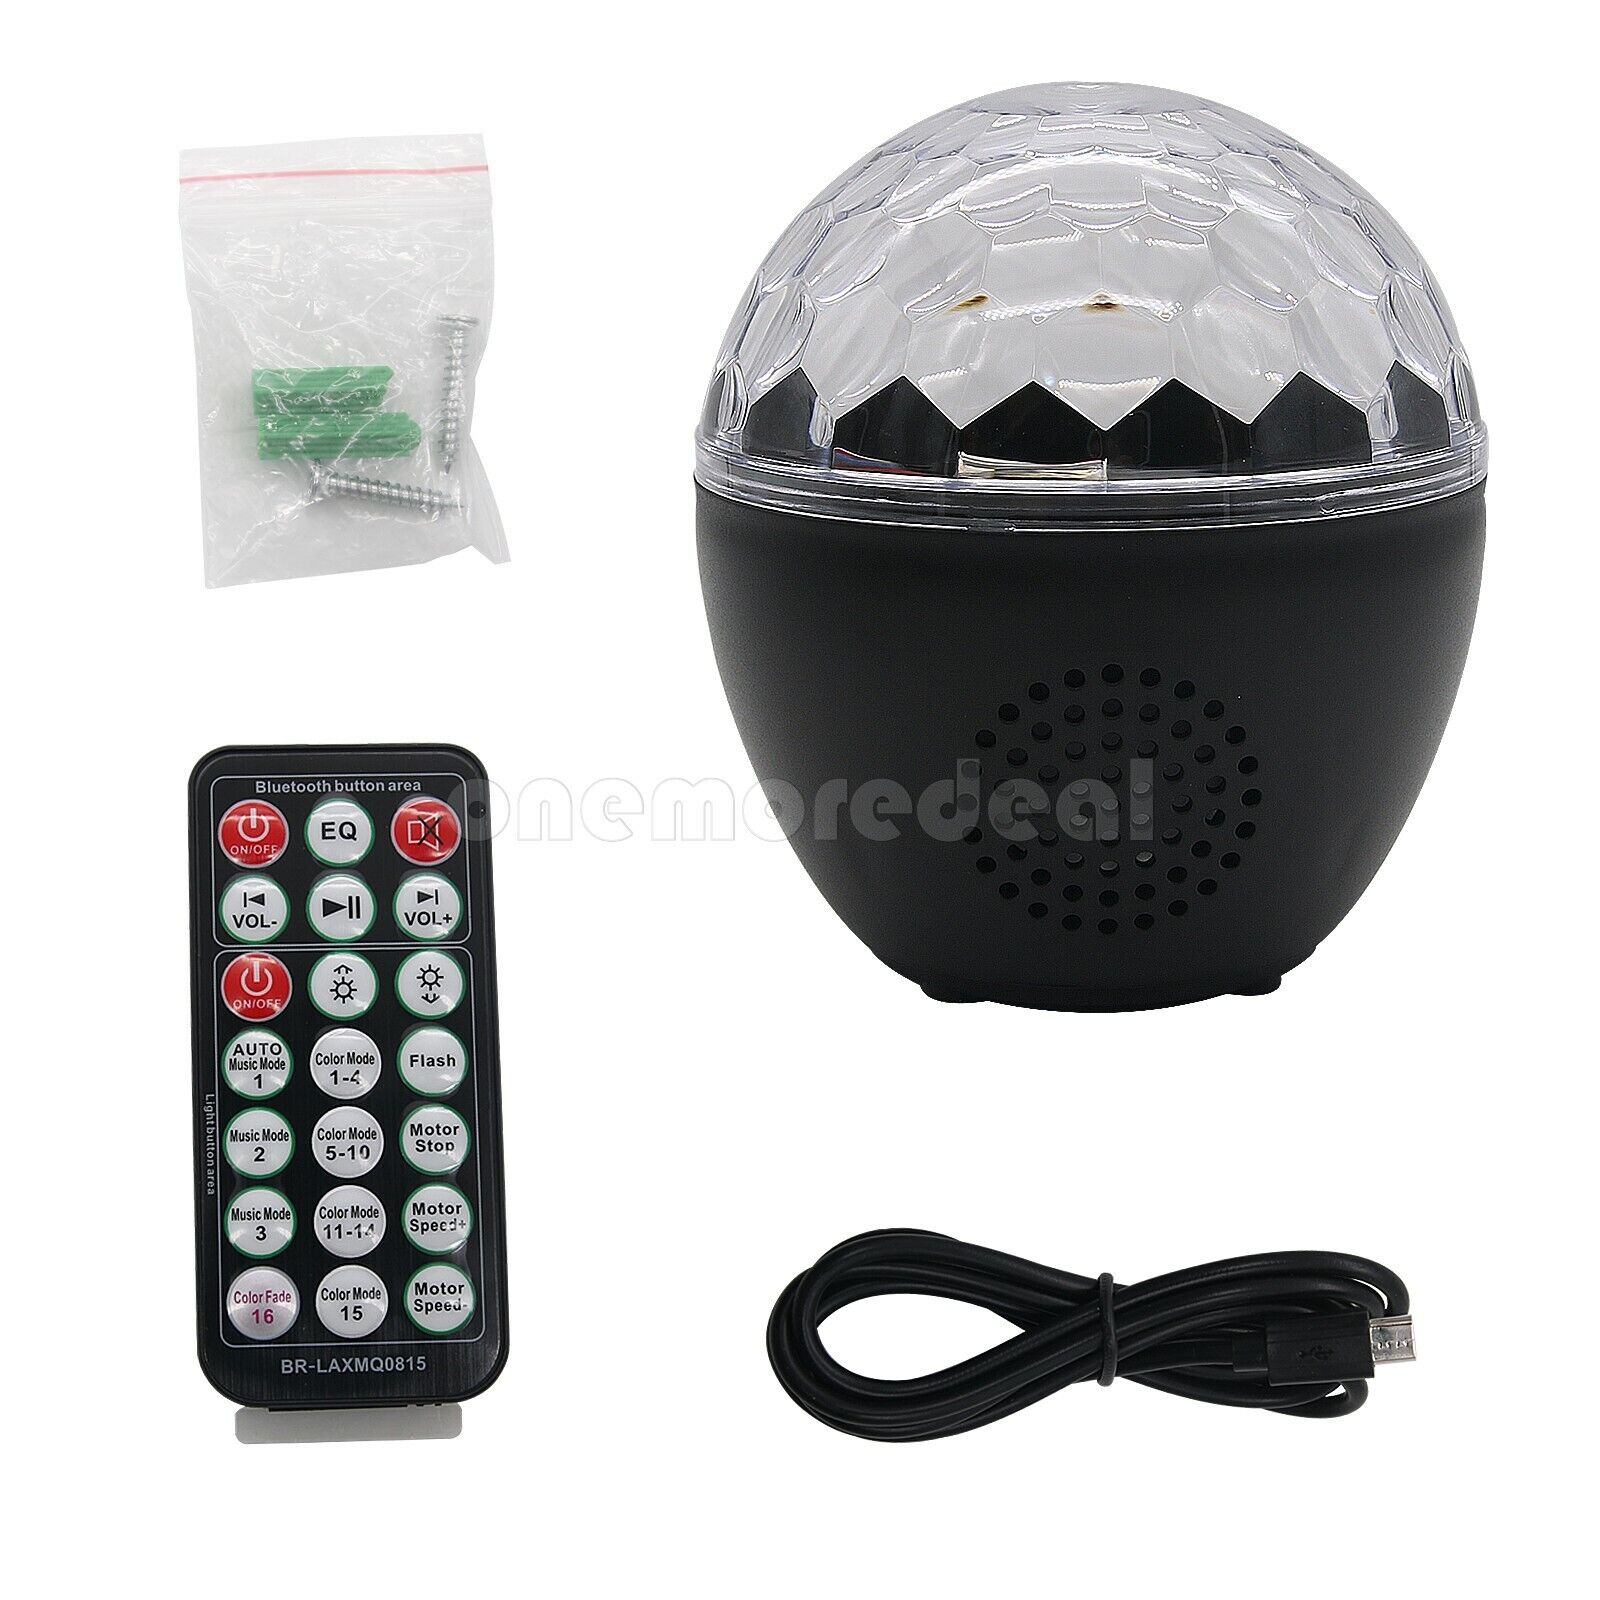 USB 5V 16-Color LED Stage Light Bluetooth Speaker Crystal Magic Ball Light RC UK